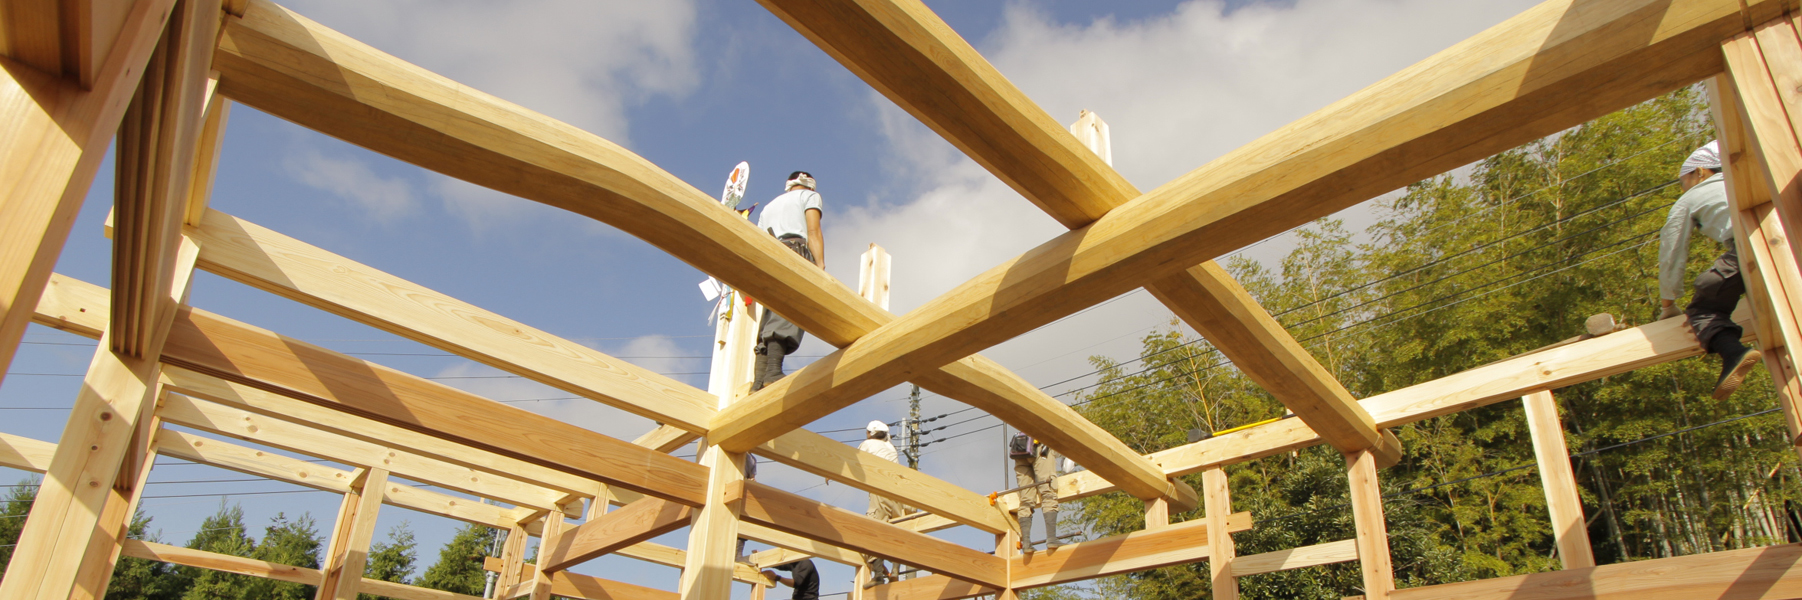 伝統構法による木造建築の建前-鴨川の家-設計施工 惺々舎